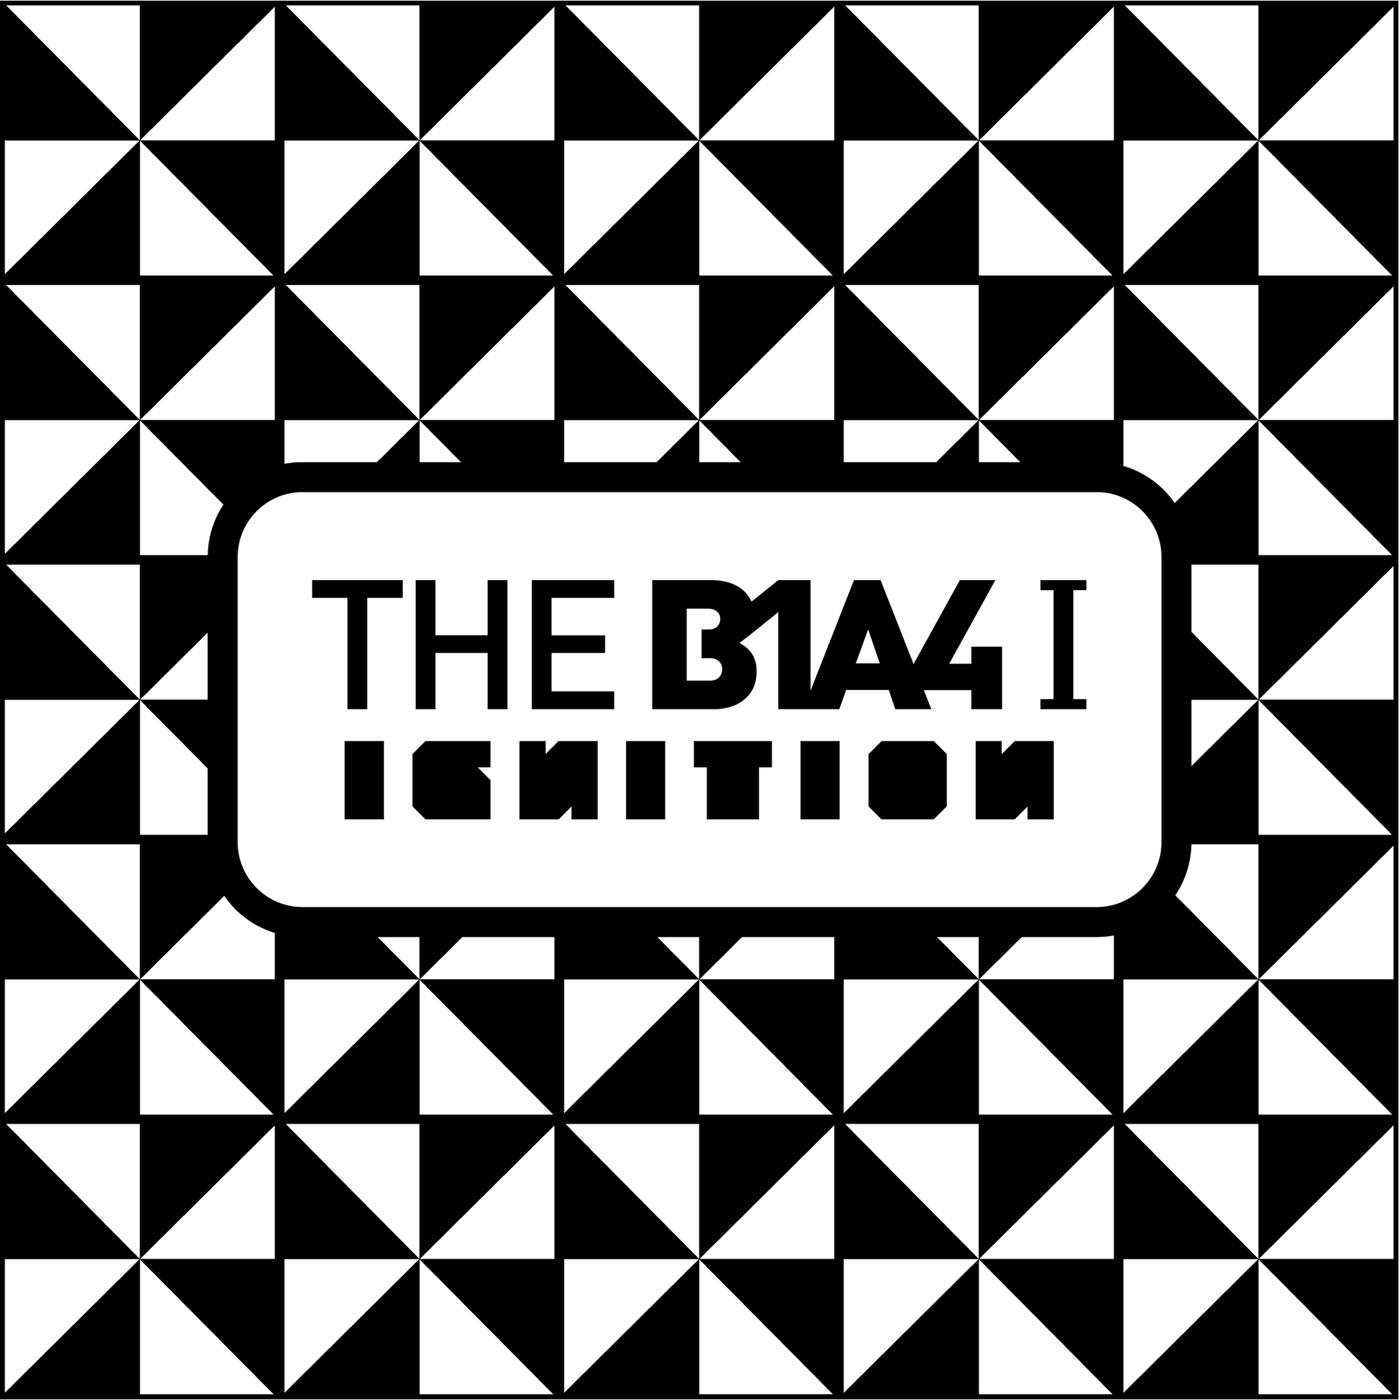 Wonderful Tonight (Unplugged Remix)歌词 歌手B1A4-专辑THE B1A4Ⅰ`IGNITION`-单曲《Wonderful Tonight (Unplugged Remix)》LRC歌词下载